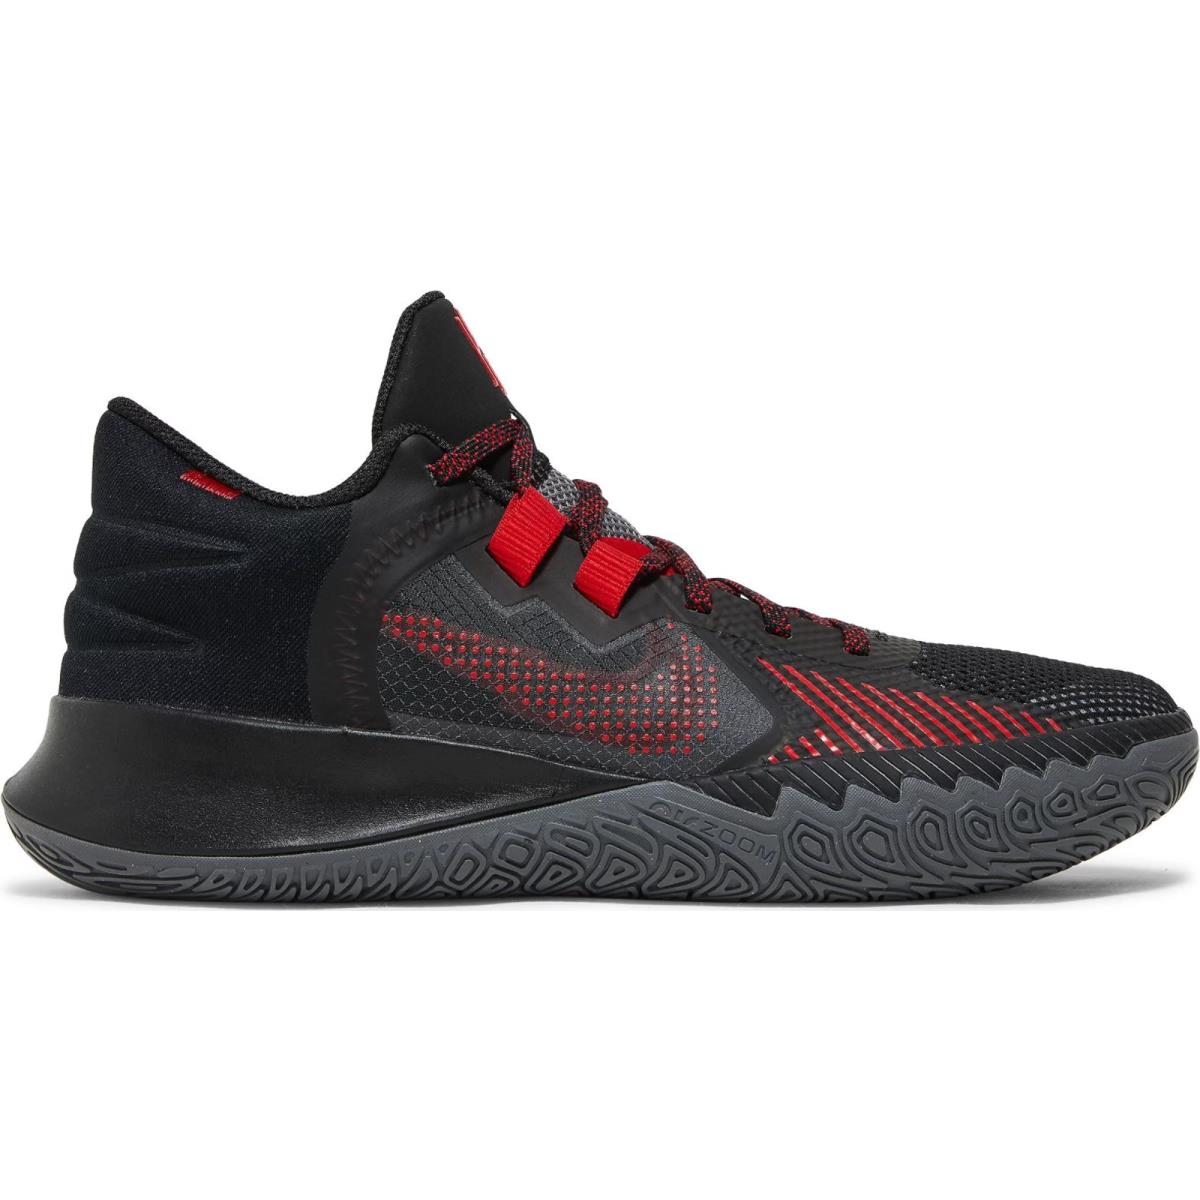 Nike Mens Kyrie Flytrap V Basketball Shoes Box NO Lid CZ4100 003 - black/university red cool grey